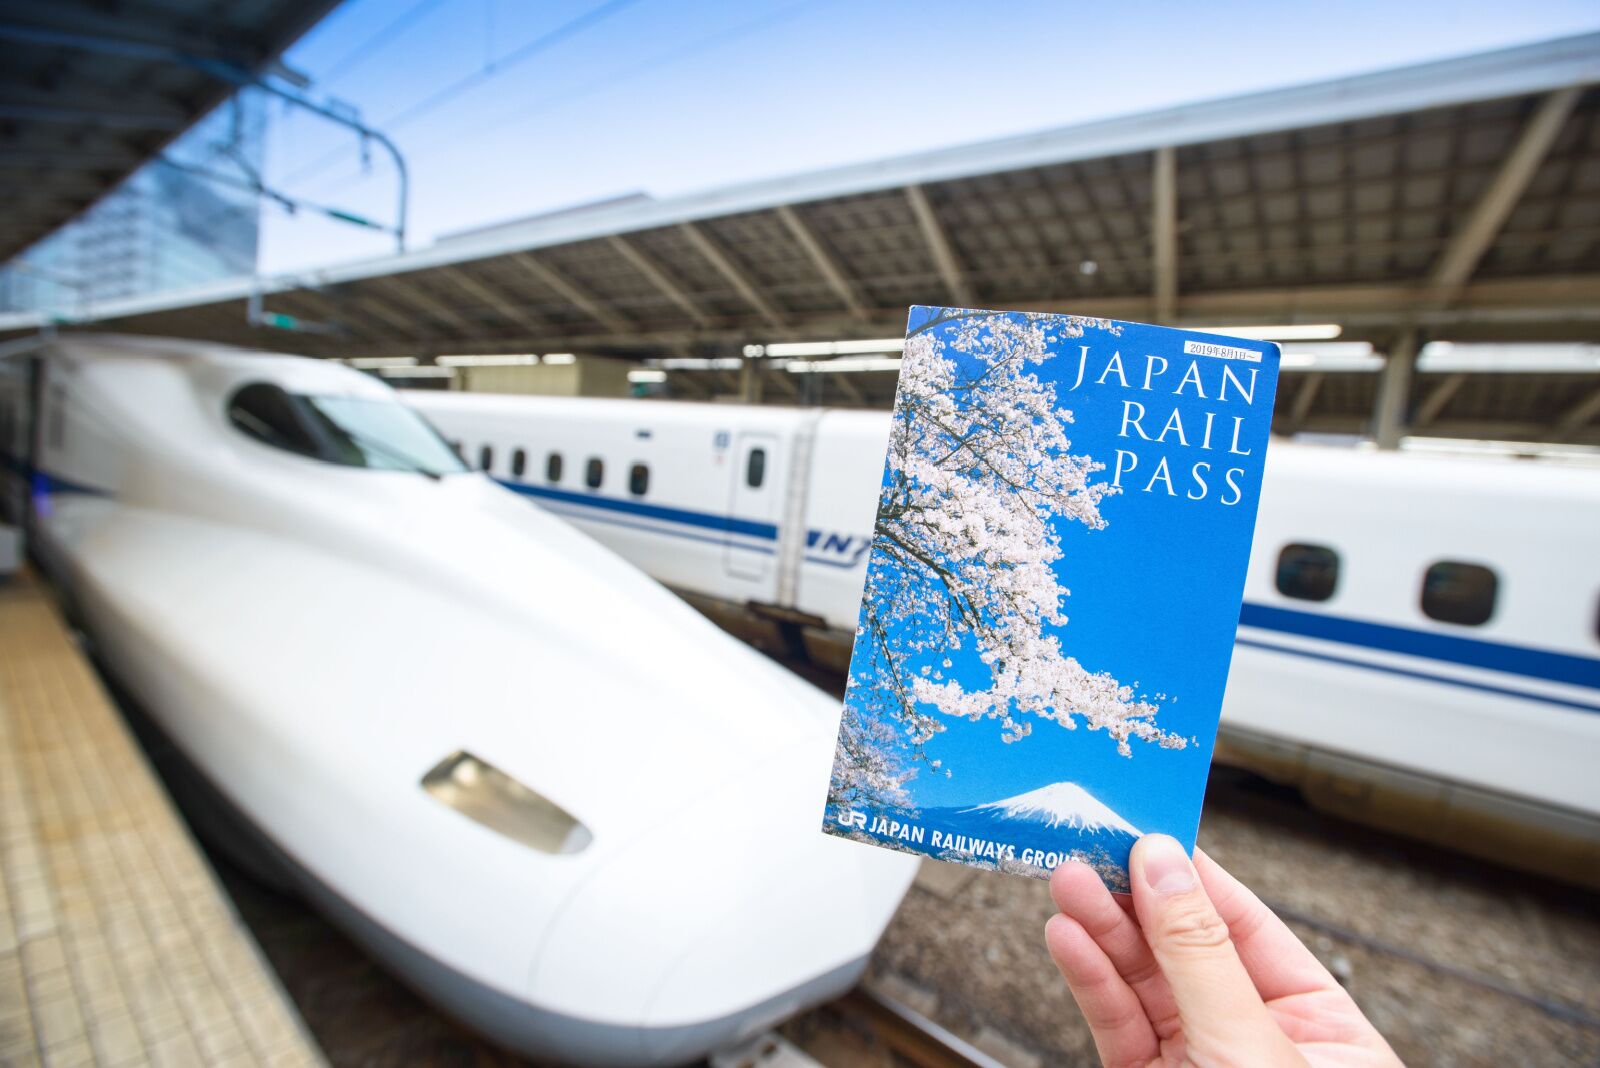 JR pass for Japan trains 